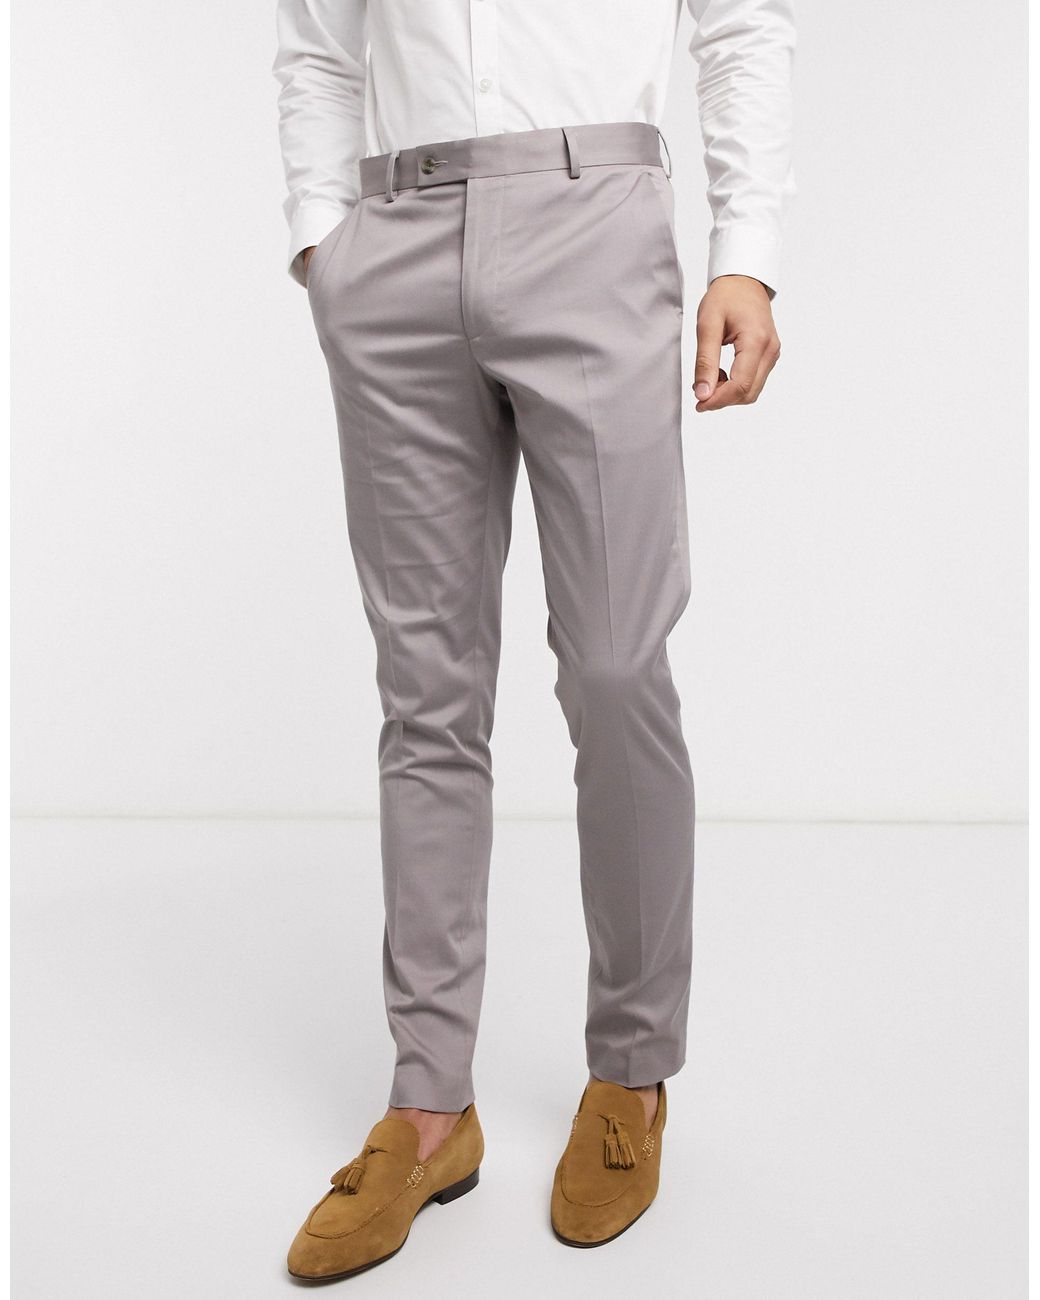 ASOS Cotton Wedding Skinny Suit Pants in Gray for Men - Lyst